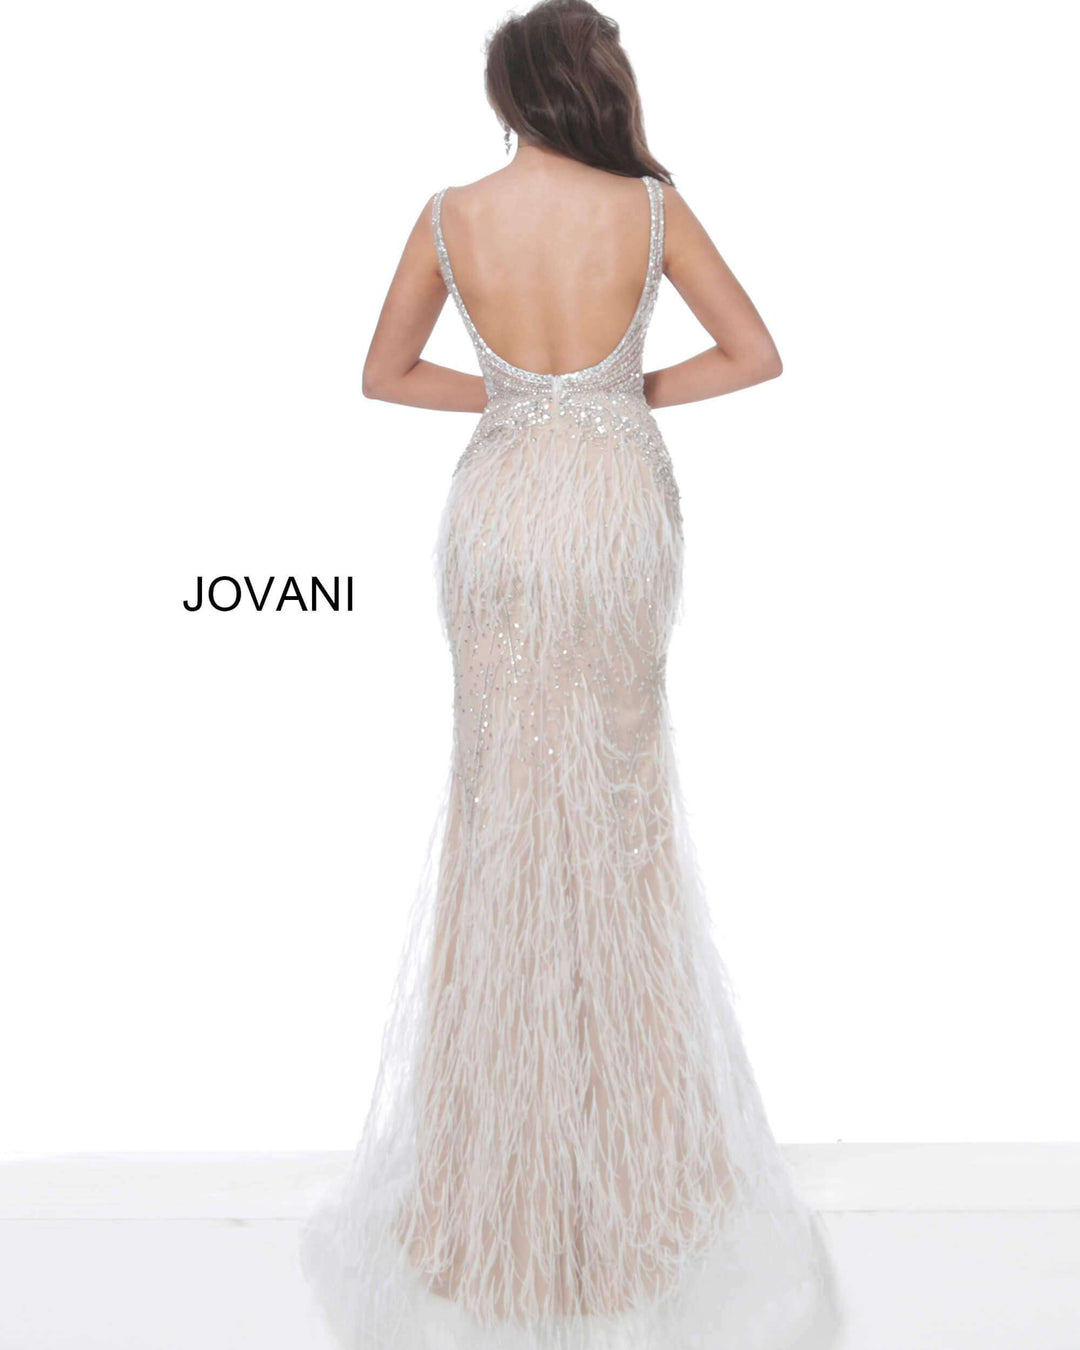 Sheer Embellished Bodice Feather Prom Dress Jovani 03023 - Morvarieds Fashion